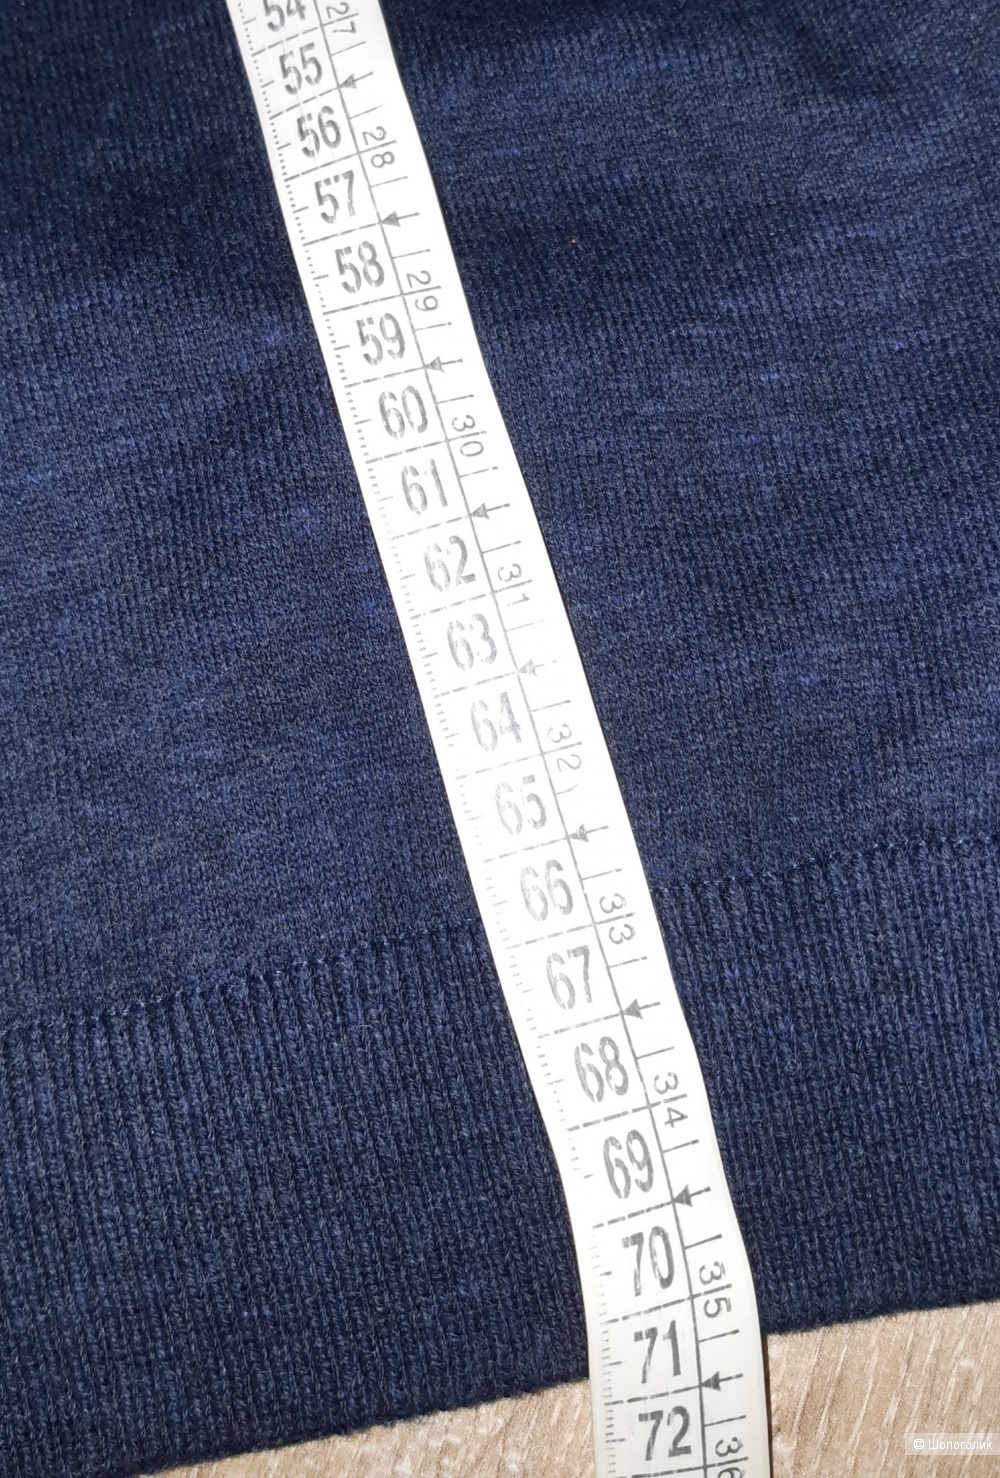 Мужской свитер jean pascale, размер l